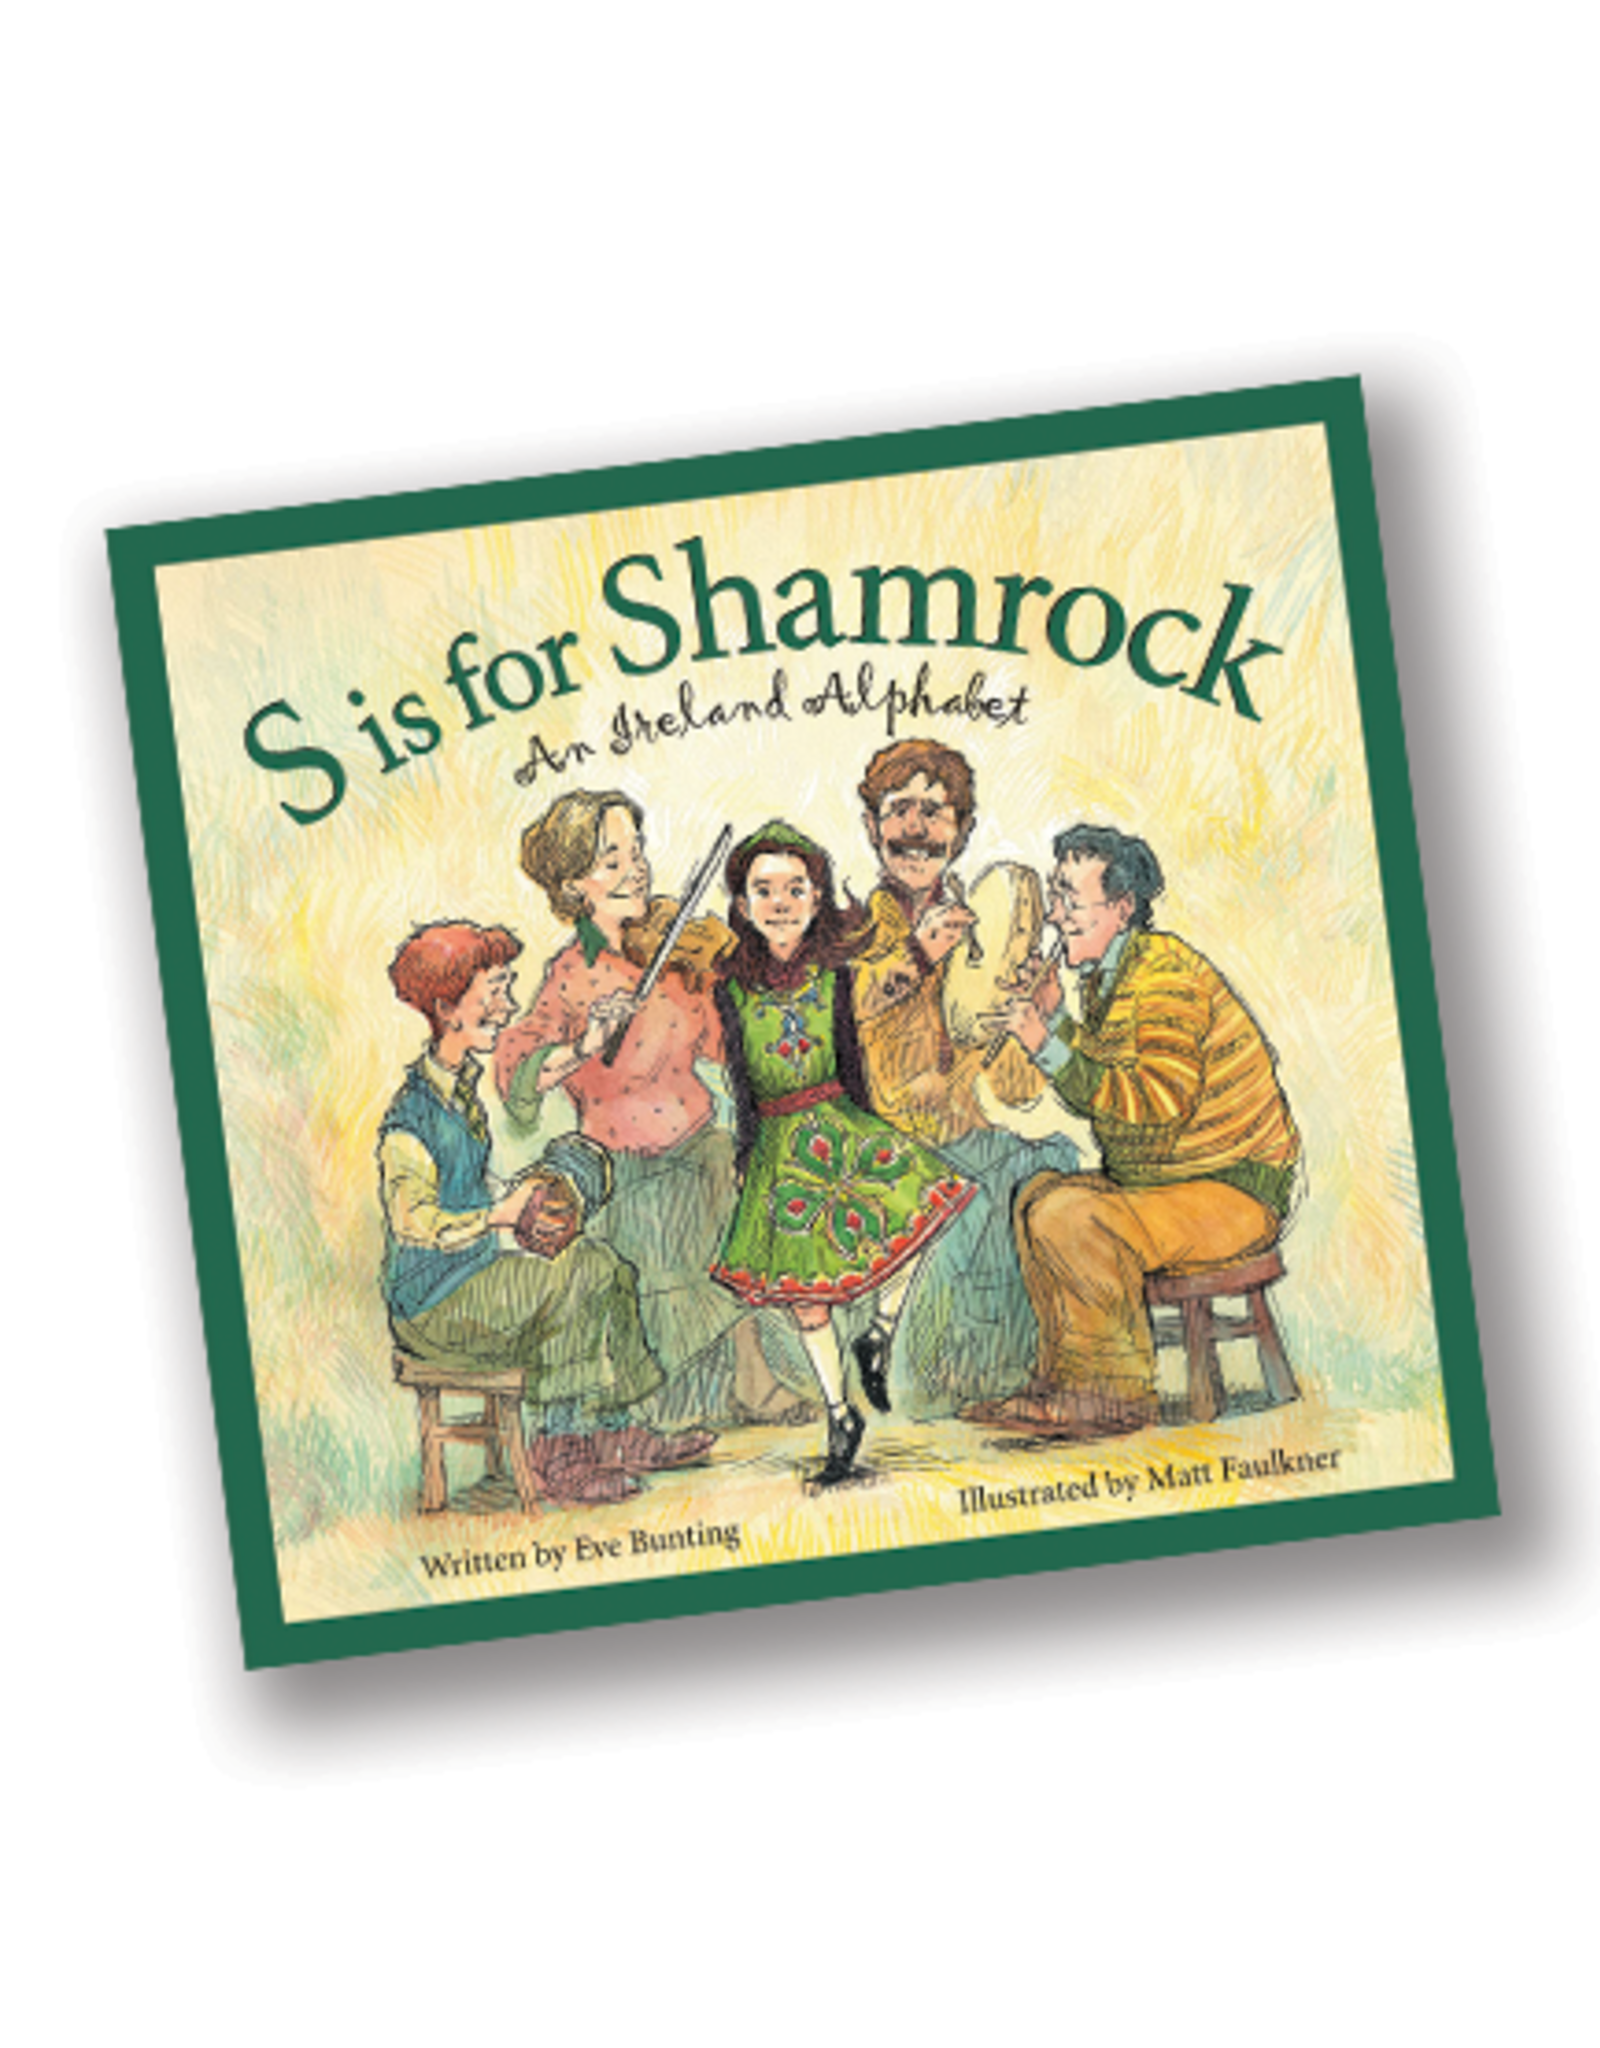 S is for Shamrock: An Ireland Alphabet